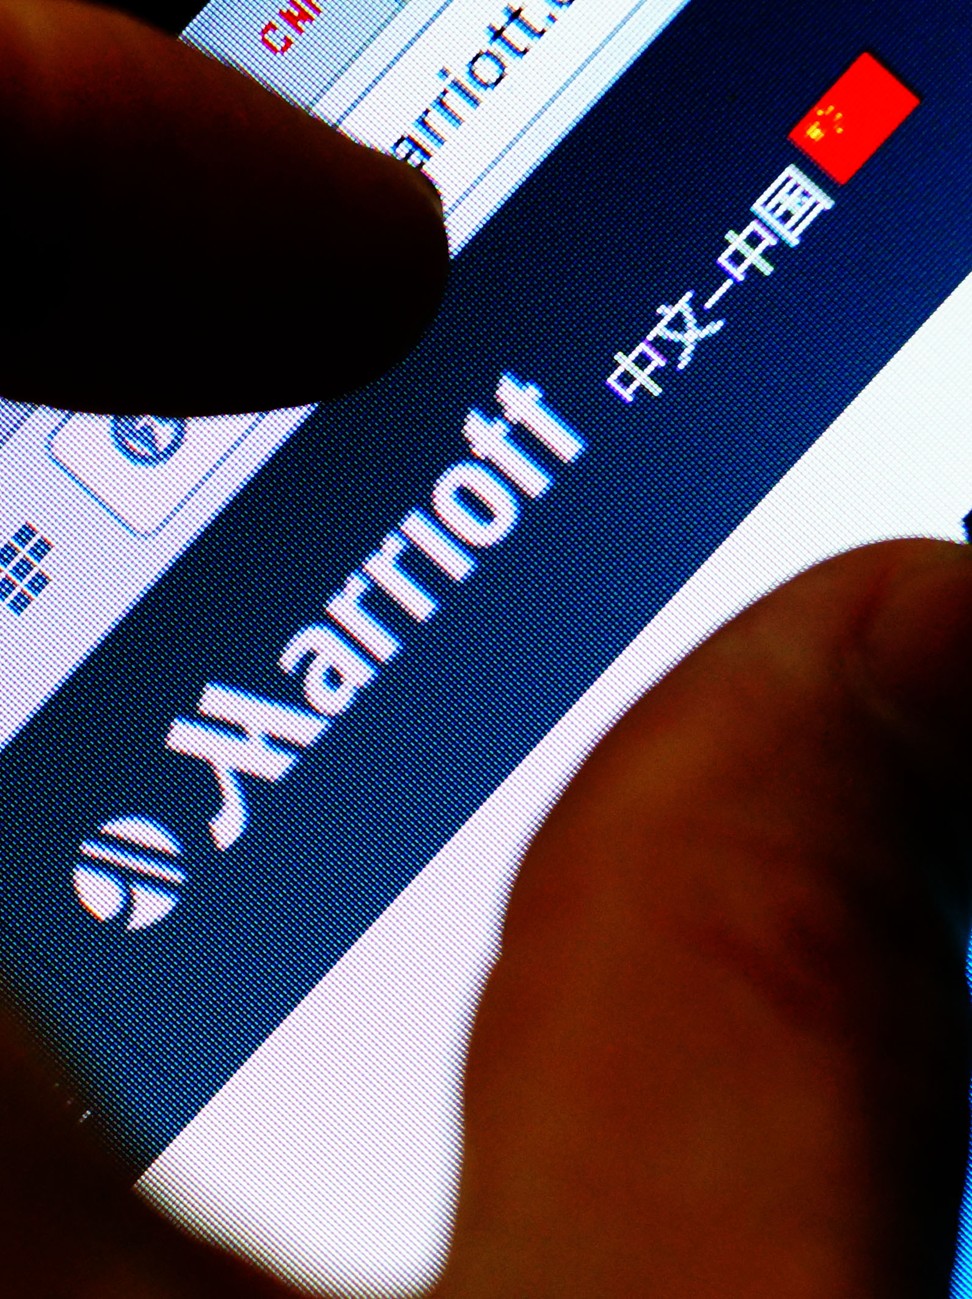 The data of 500 million Marriott customers was hacked last year. Photo: ImagineChina